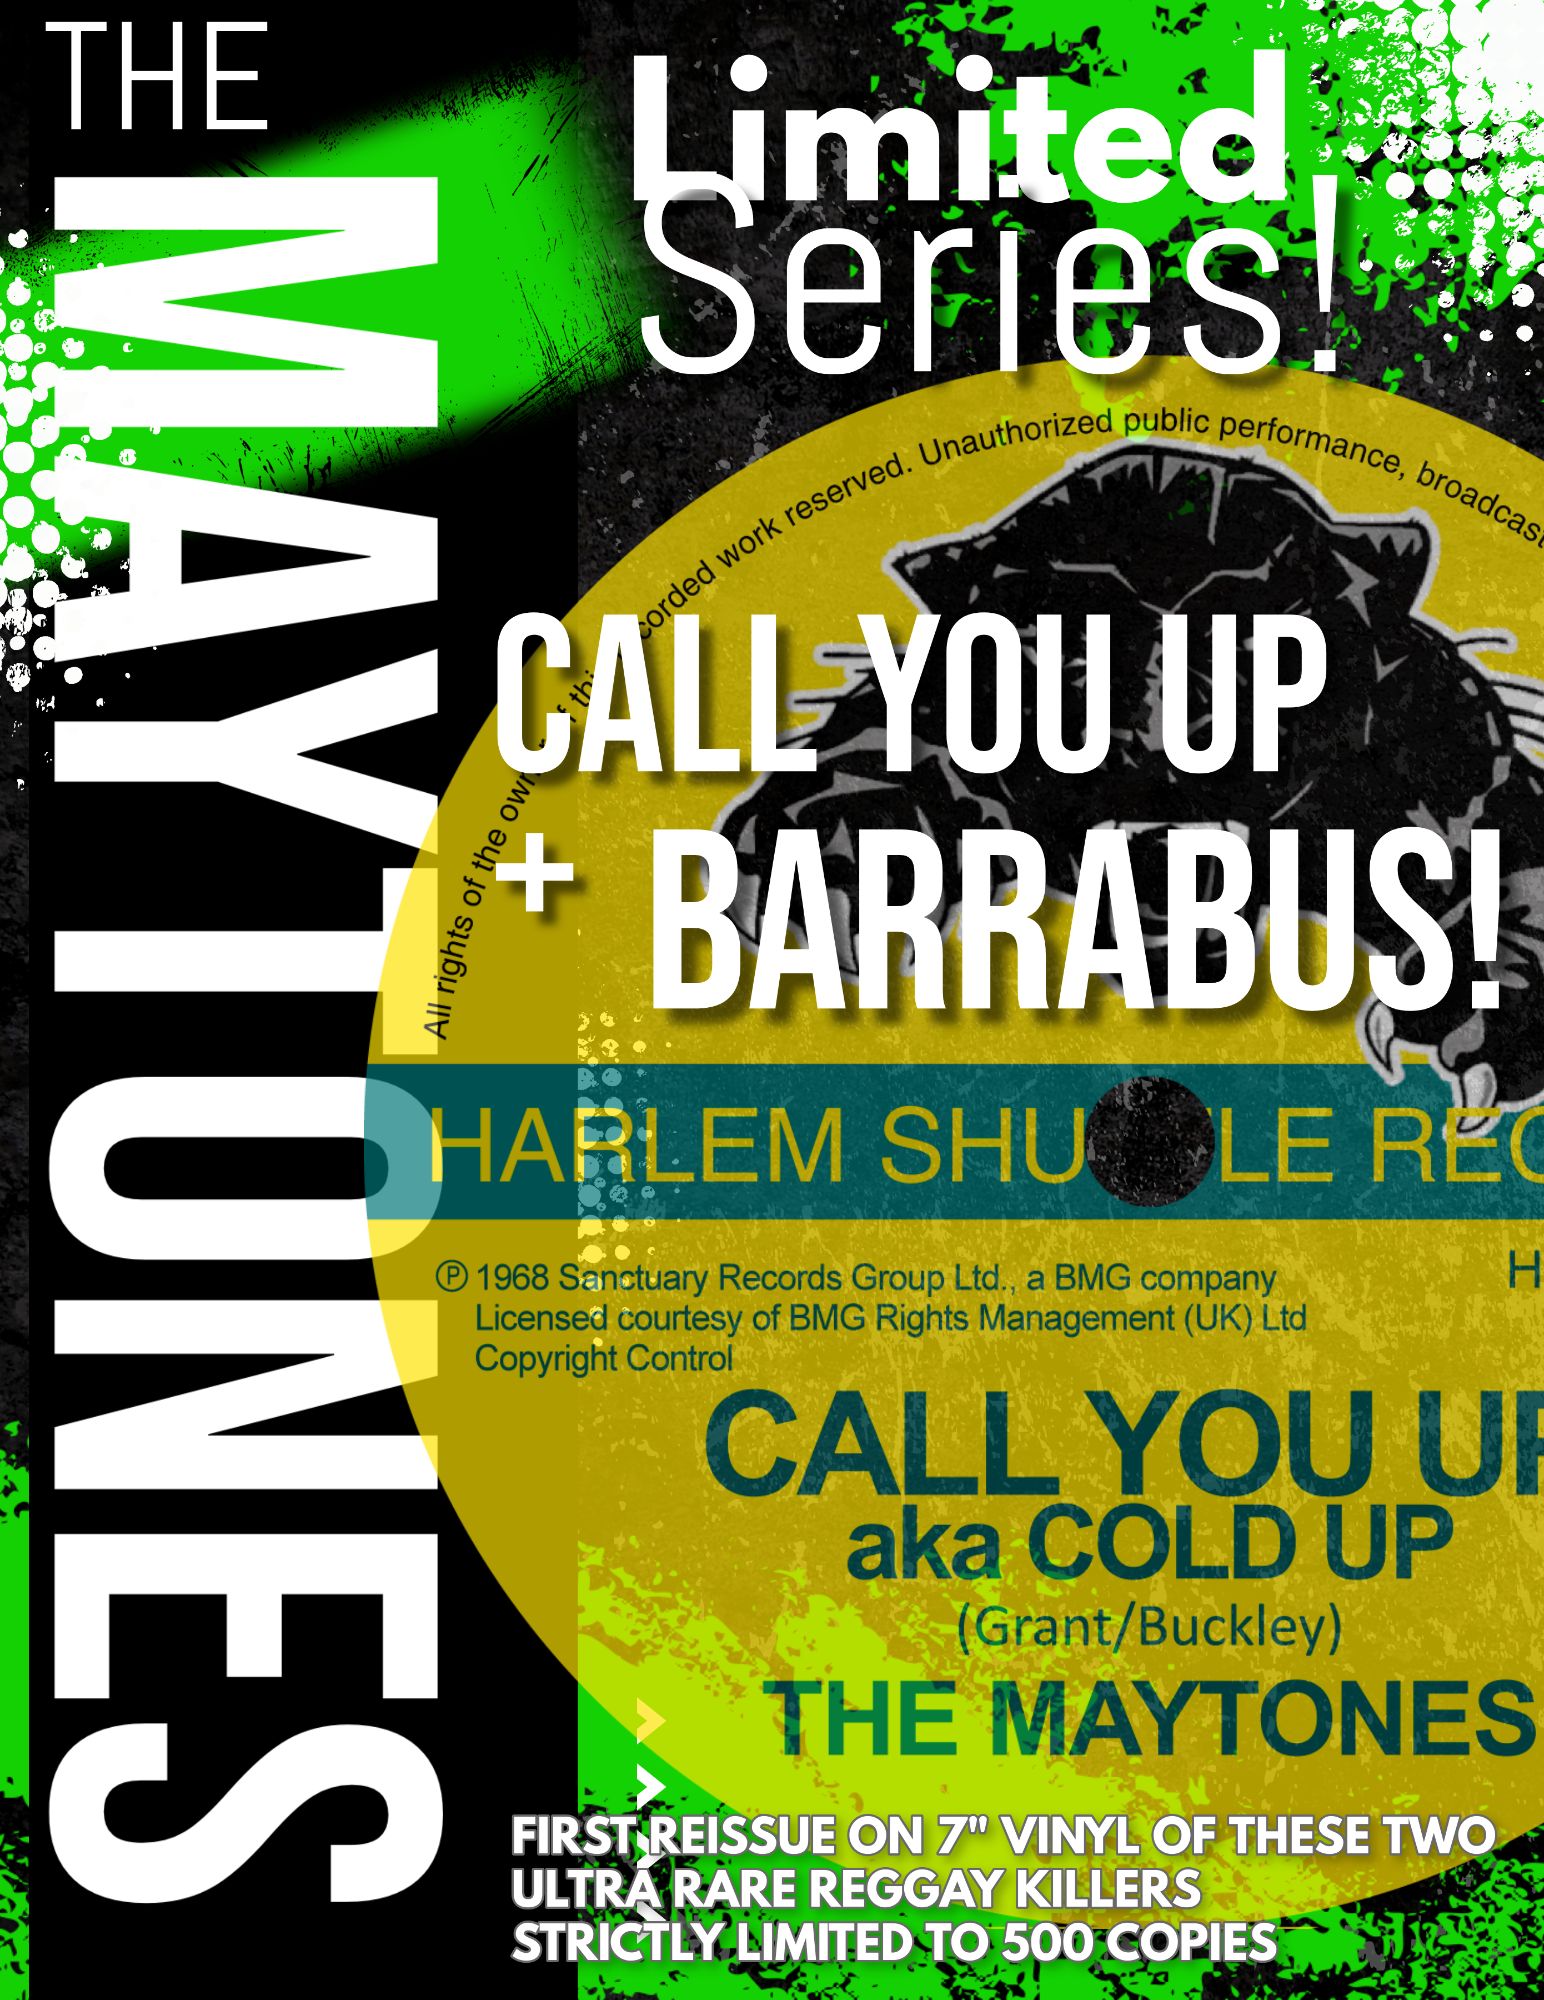 The Maytones - Call you up - Barrabus - 7inch vinyl single - Harlem SHuffle Records